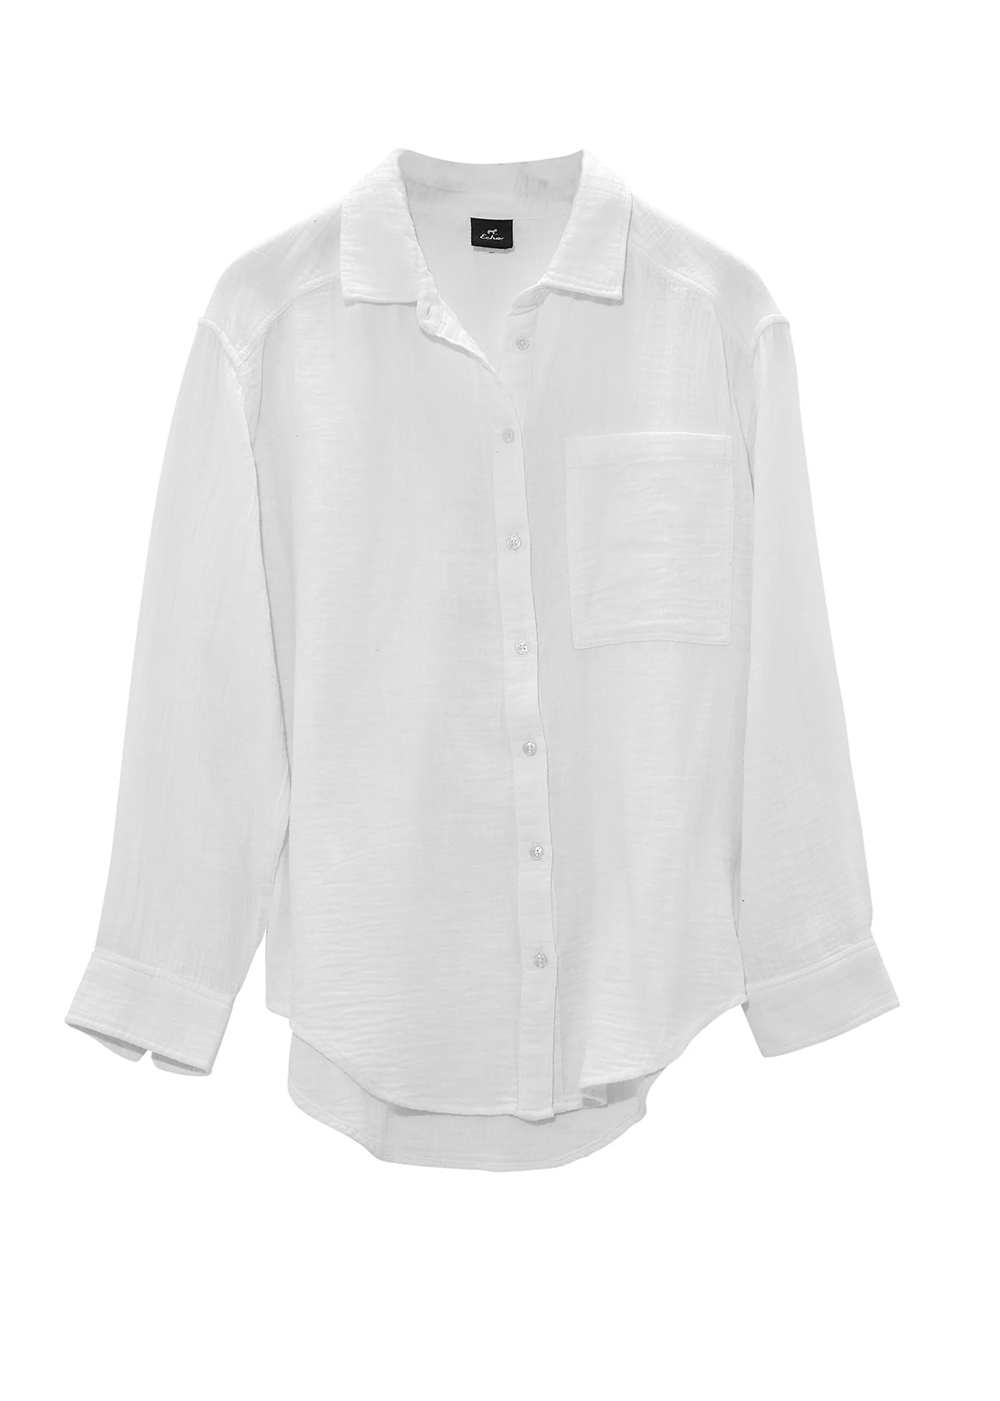 Supersoft Gauze Boyfriend Shirt - White - Echo New York - Danali - EB0400-100